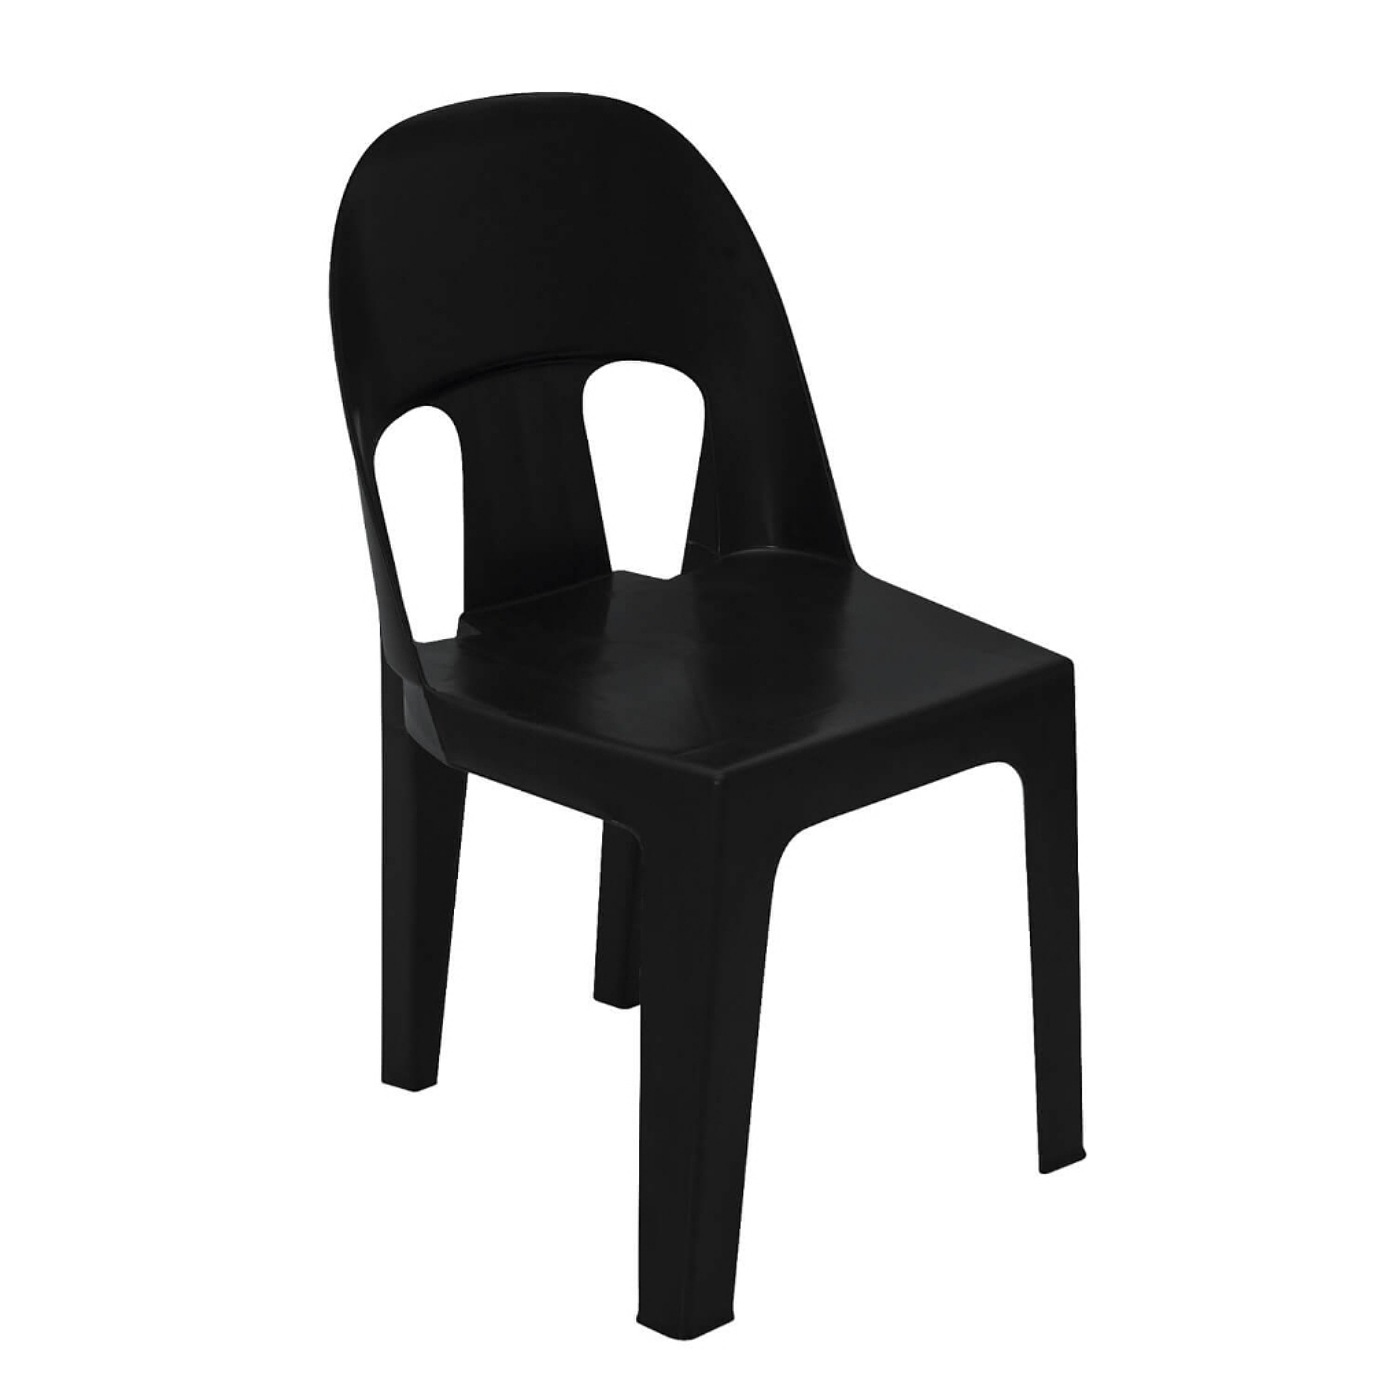 Black Armless Plastic Chair.